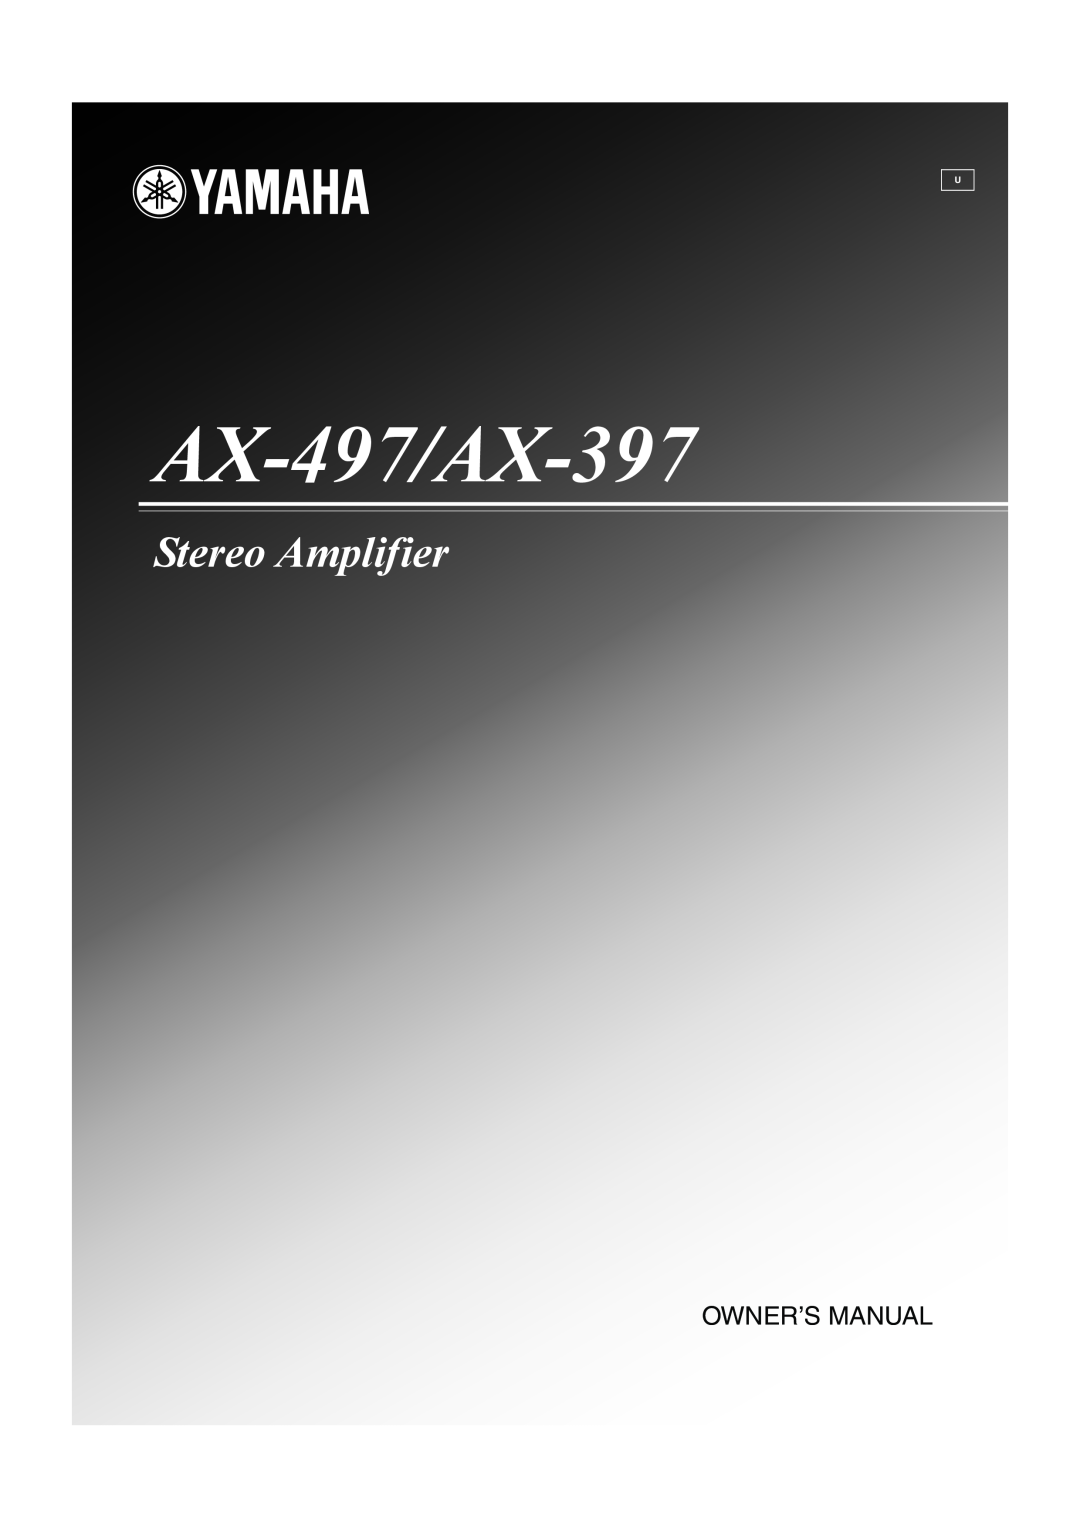 Yamaha owner manual AX-497/AX-397, Stereo Amplifier 